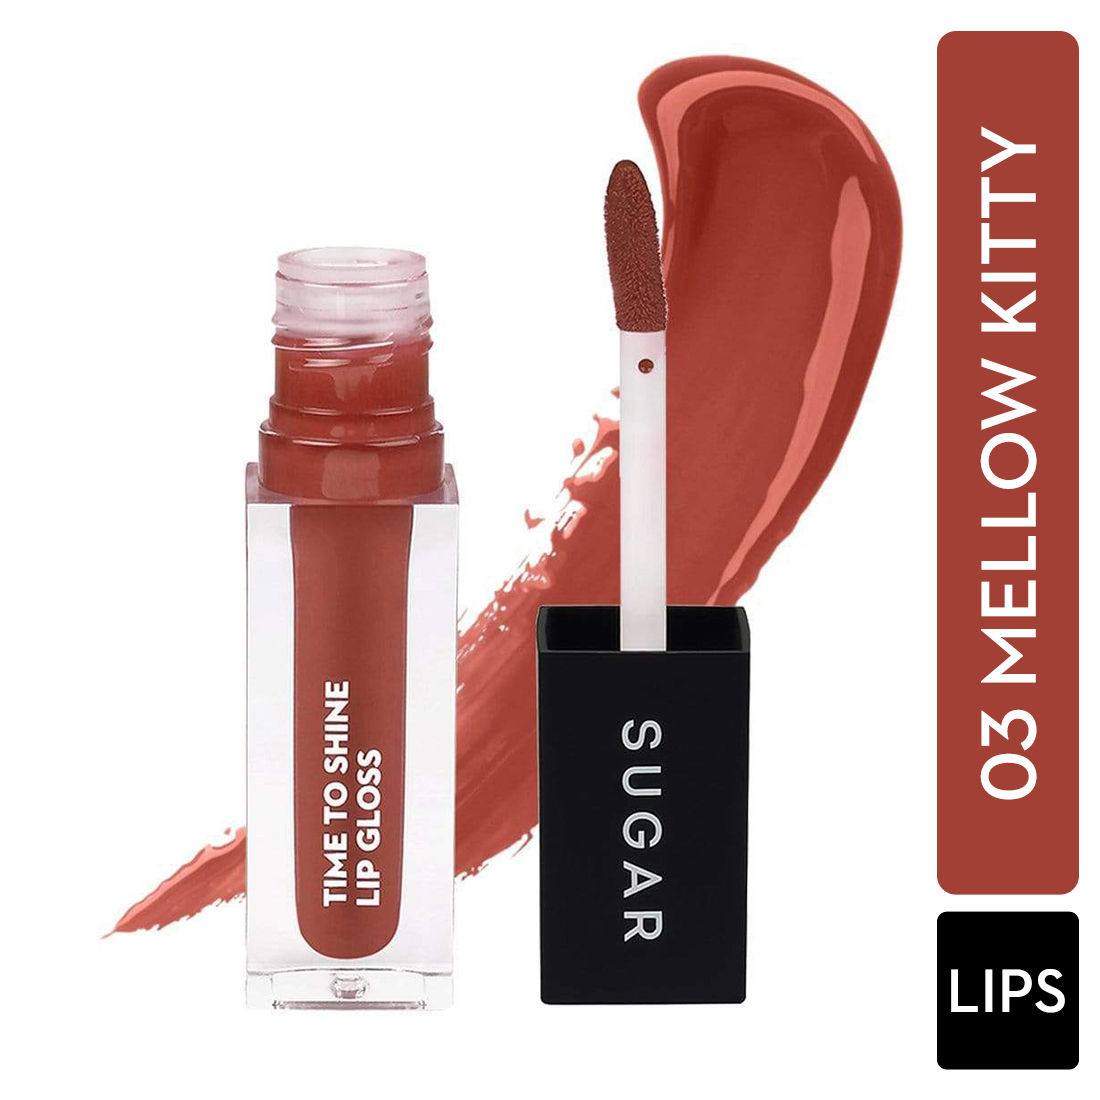 Buy SUGAR Time To Shine Lip Gloss - 03 Mellow Kitty - Purplle